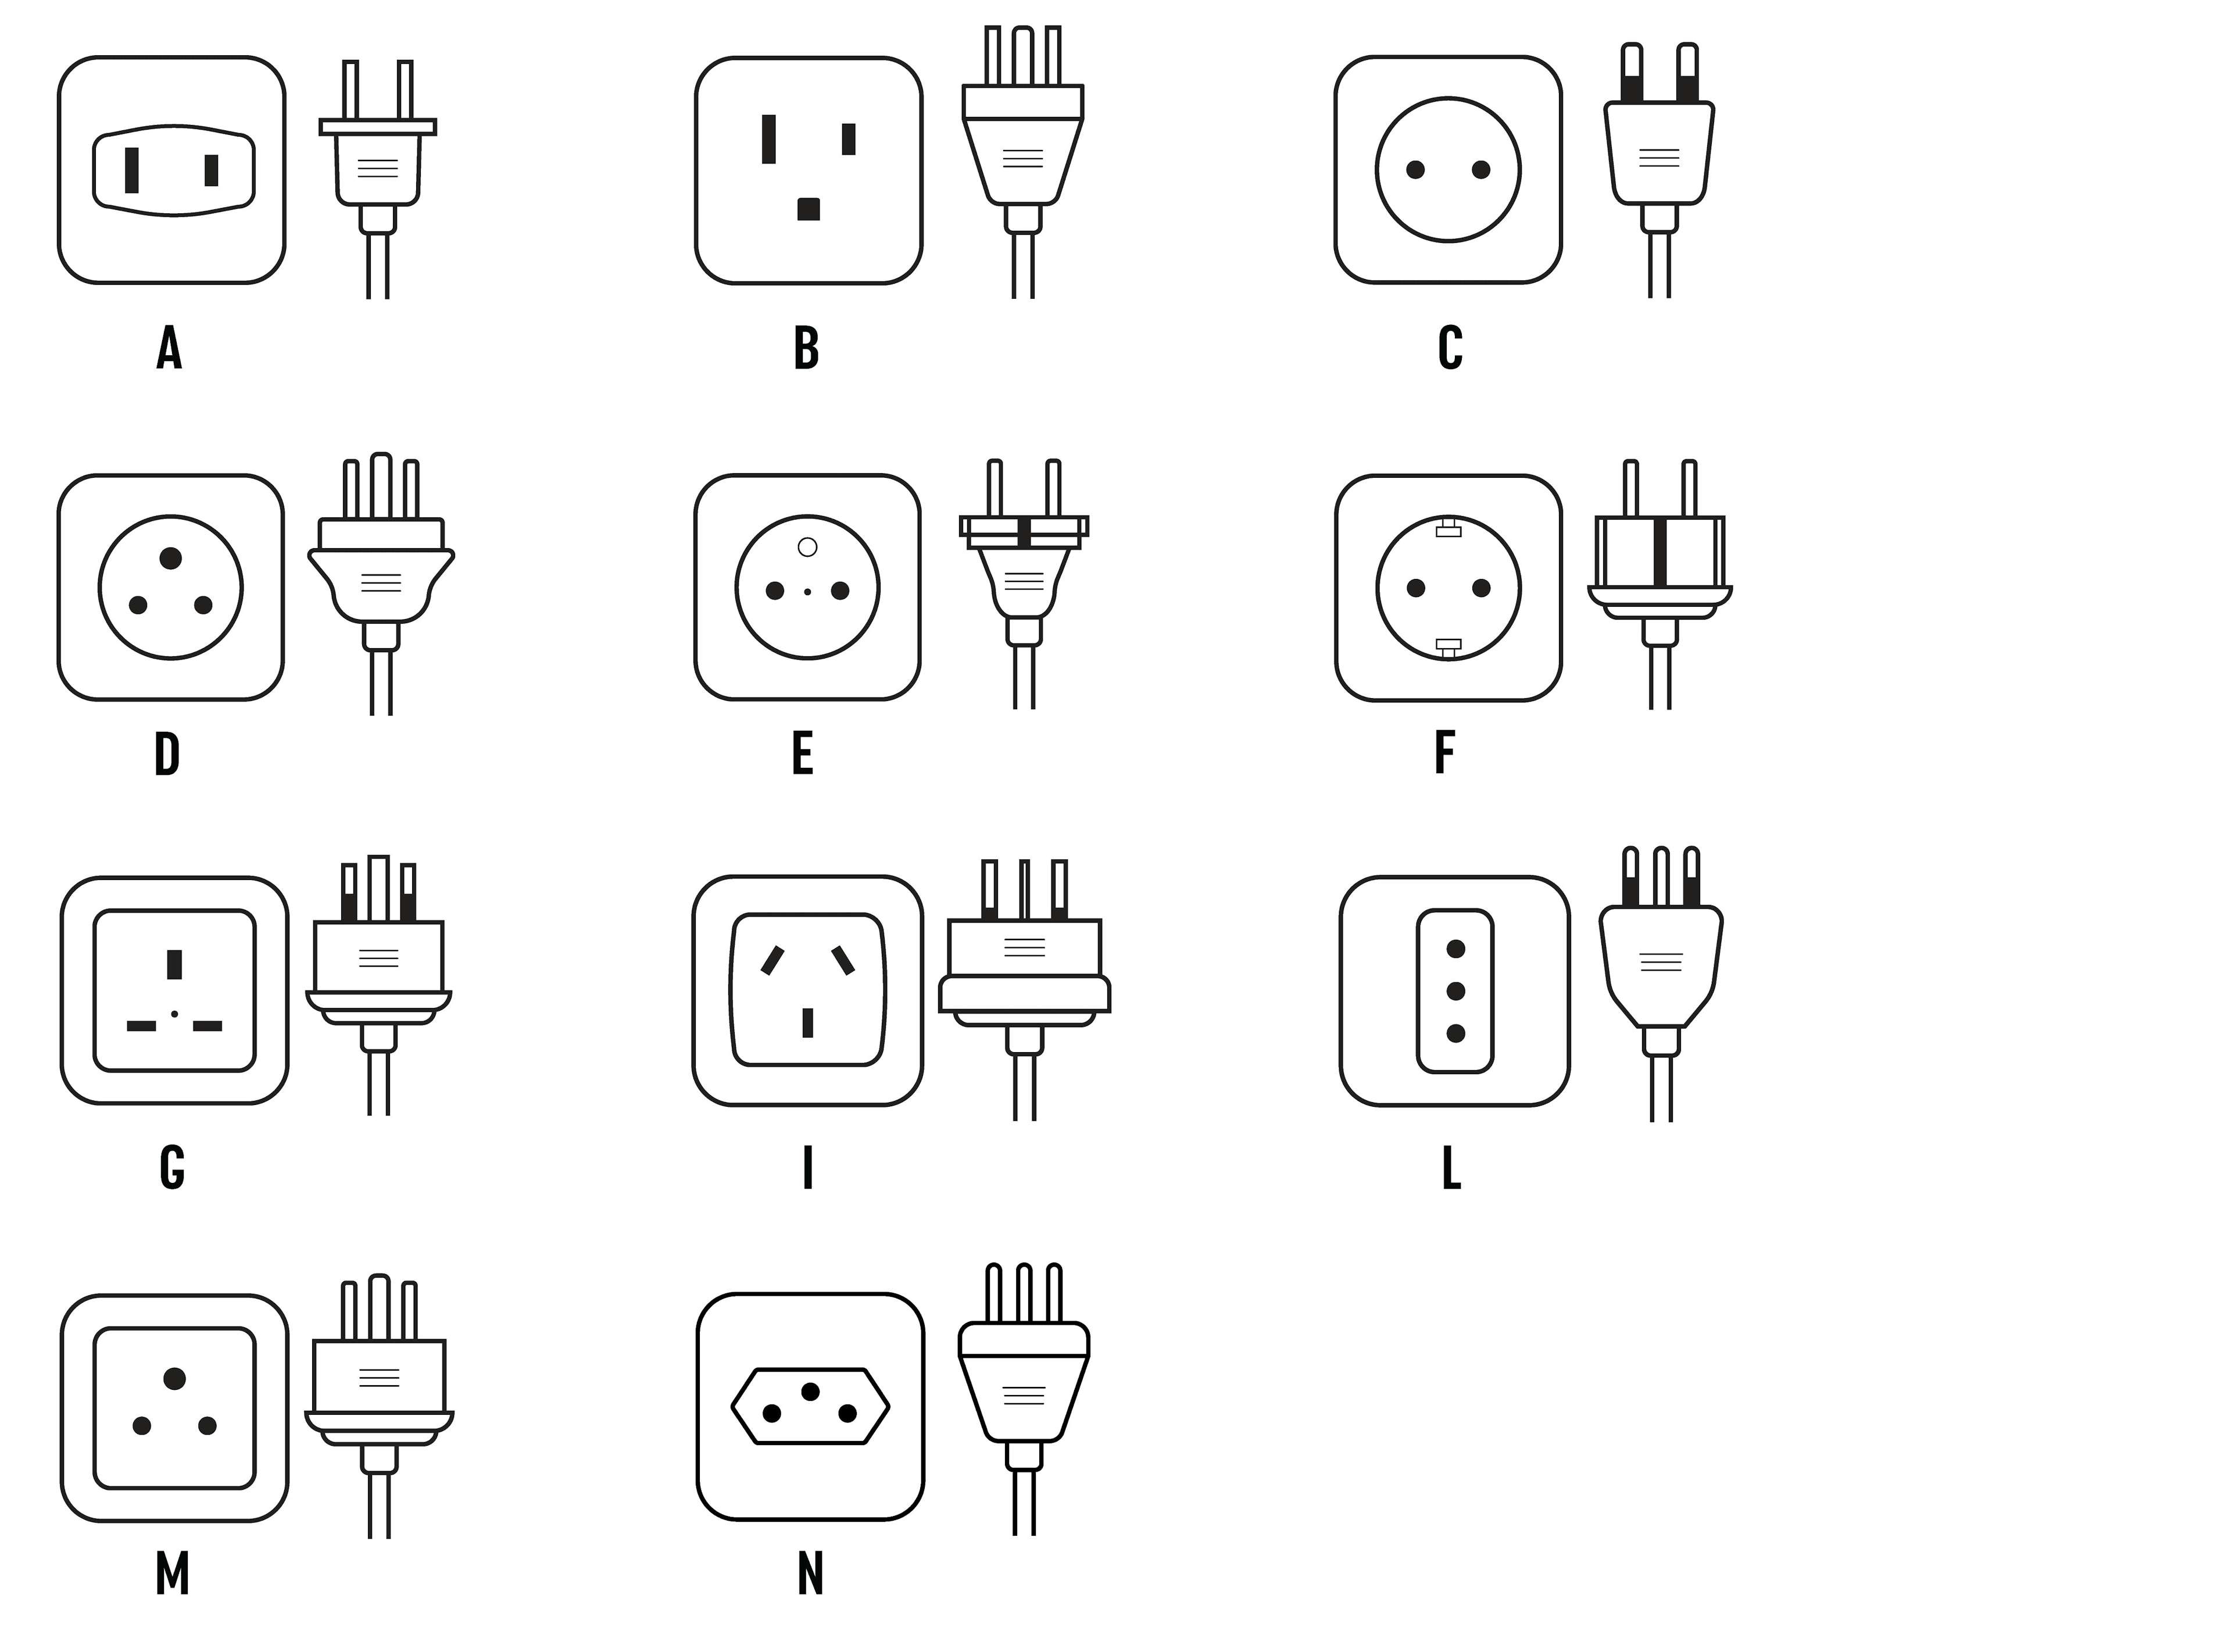 Types of plugs around the world